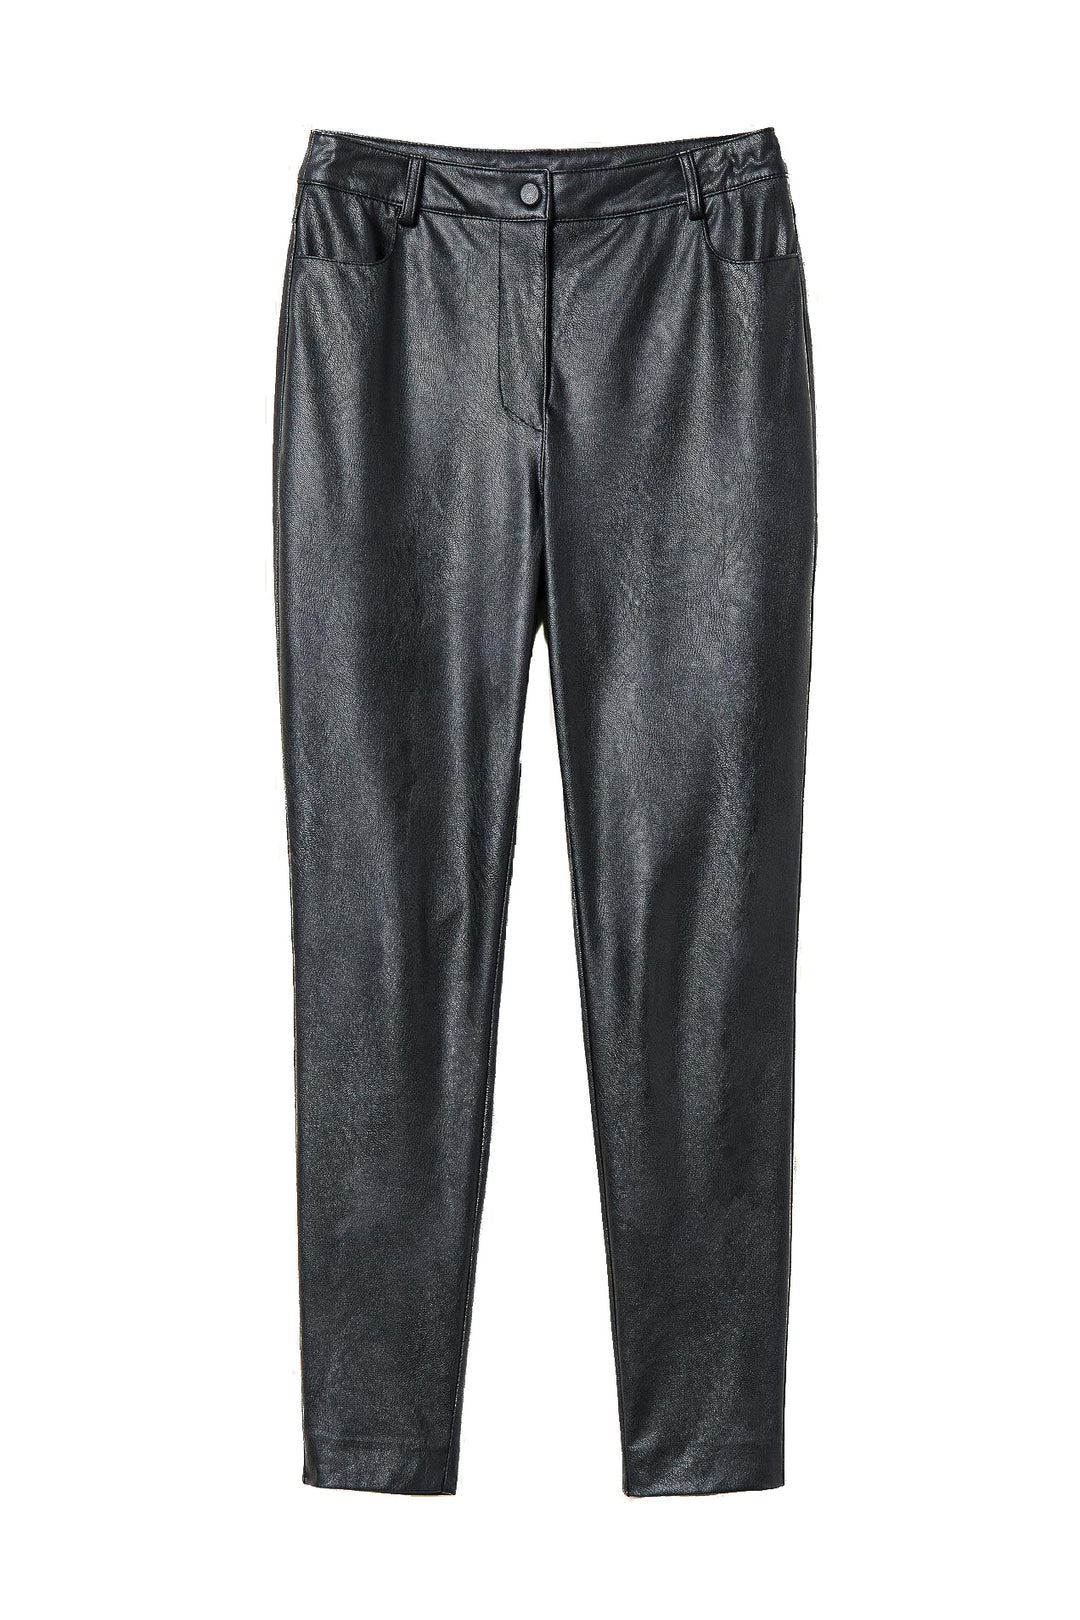 TWINSET Pantaloni skinny neri effetto pelle - Mancinelli 1954